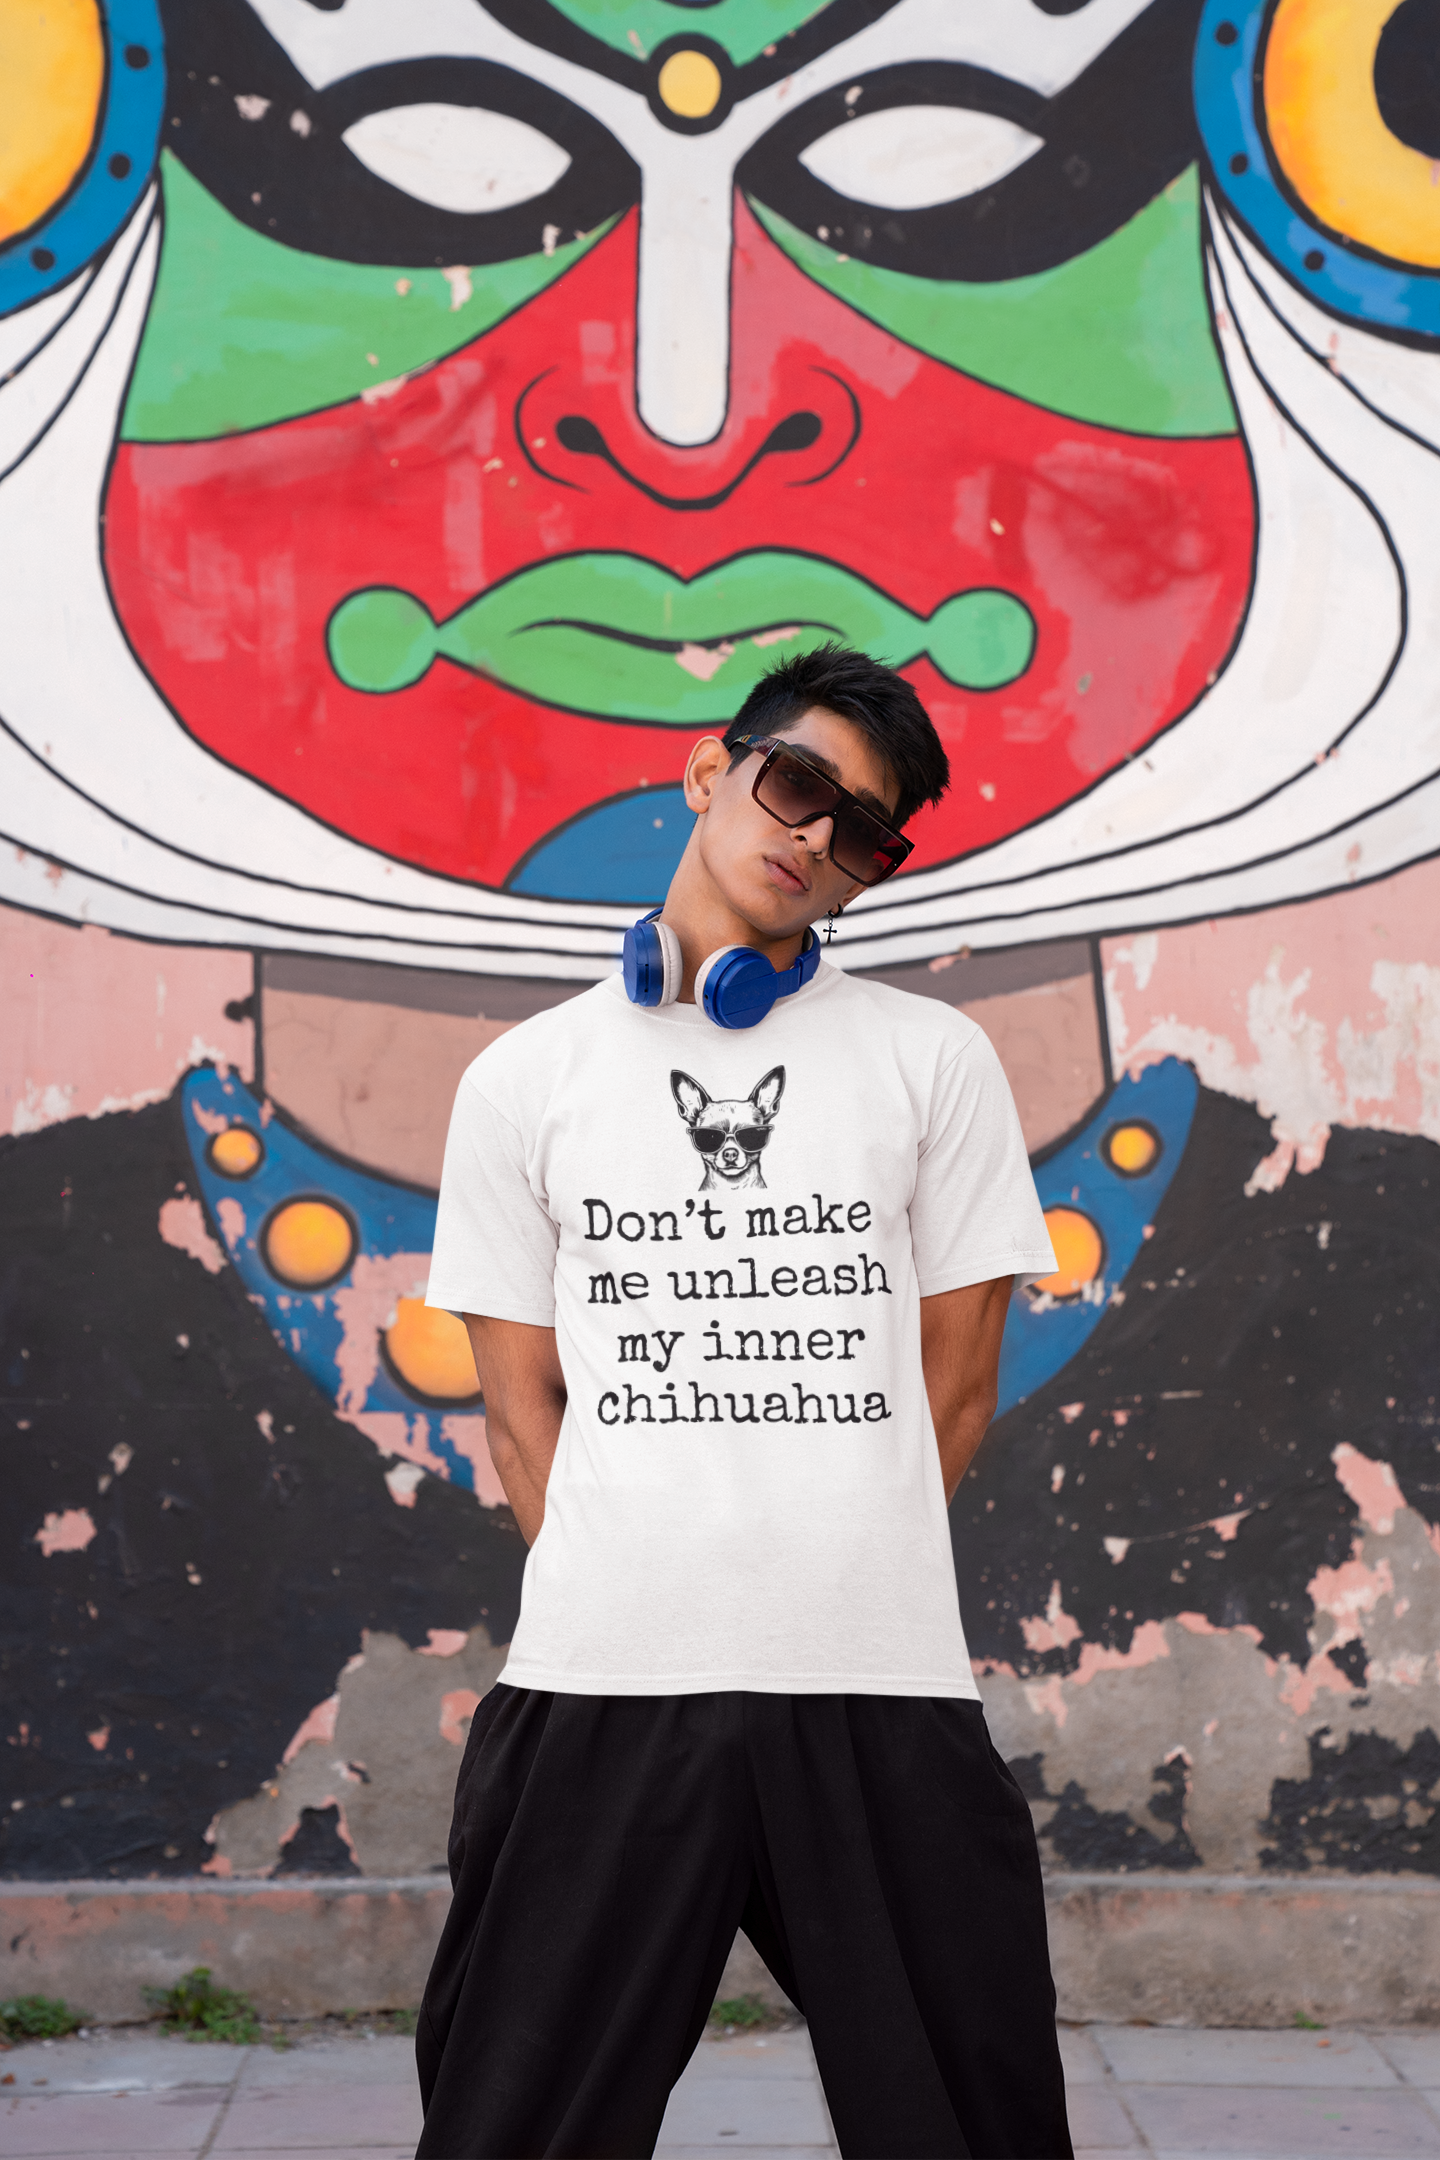 Man in psycho chihuahua t-shirt